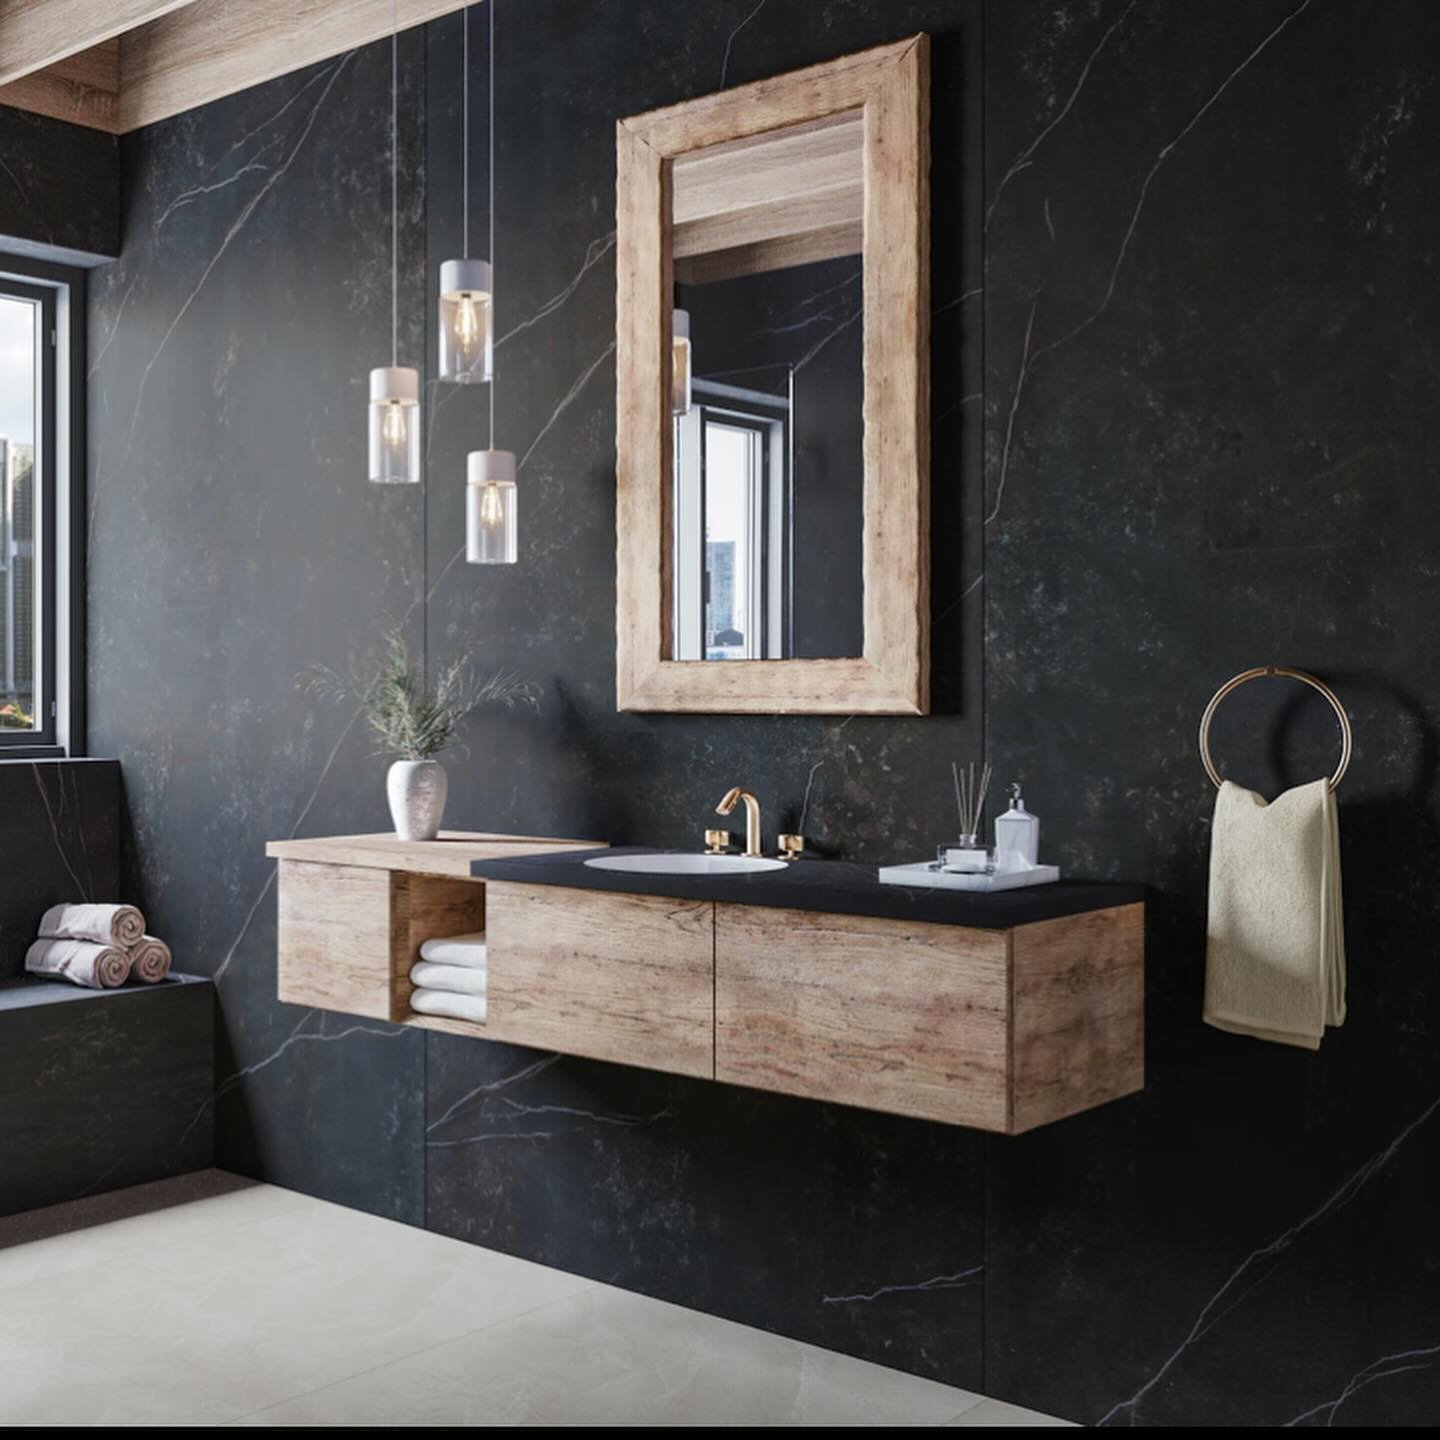 KELYA Worktops &amp; Surfaces courtesy of @dektonbycosentino #measured #made #fitted by @lbsstone 

#bathroom #shower #vanity #countertops #worktops #dekton #kelya #black #white #home #design #interiordesign #lifestyle #sussex #london #marble #granit